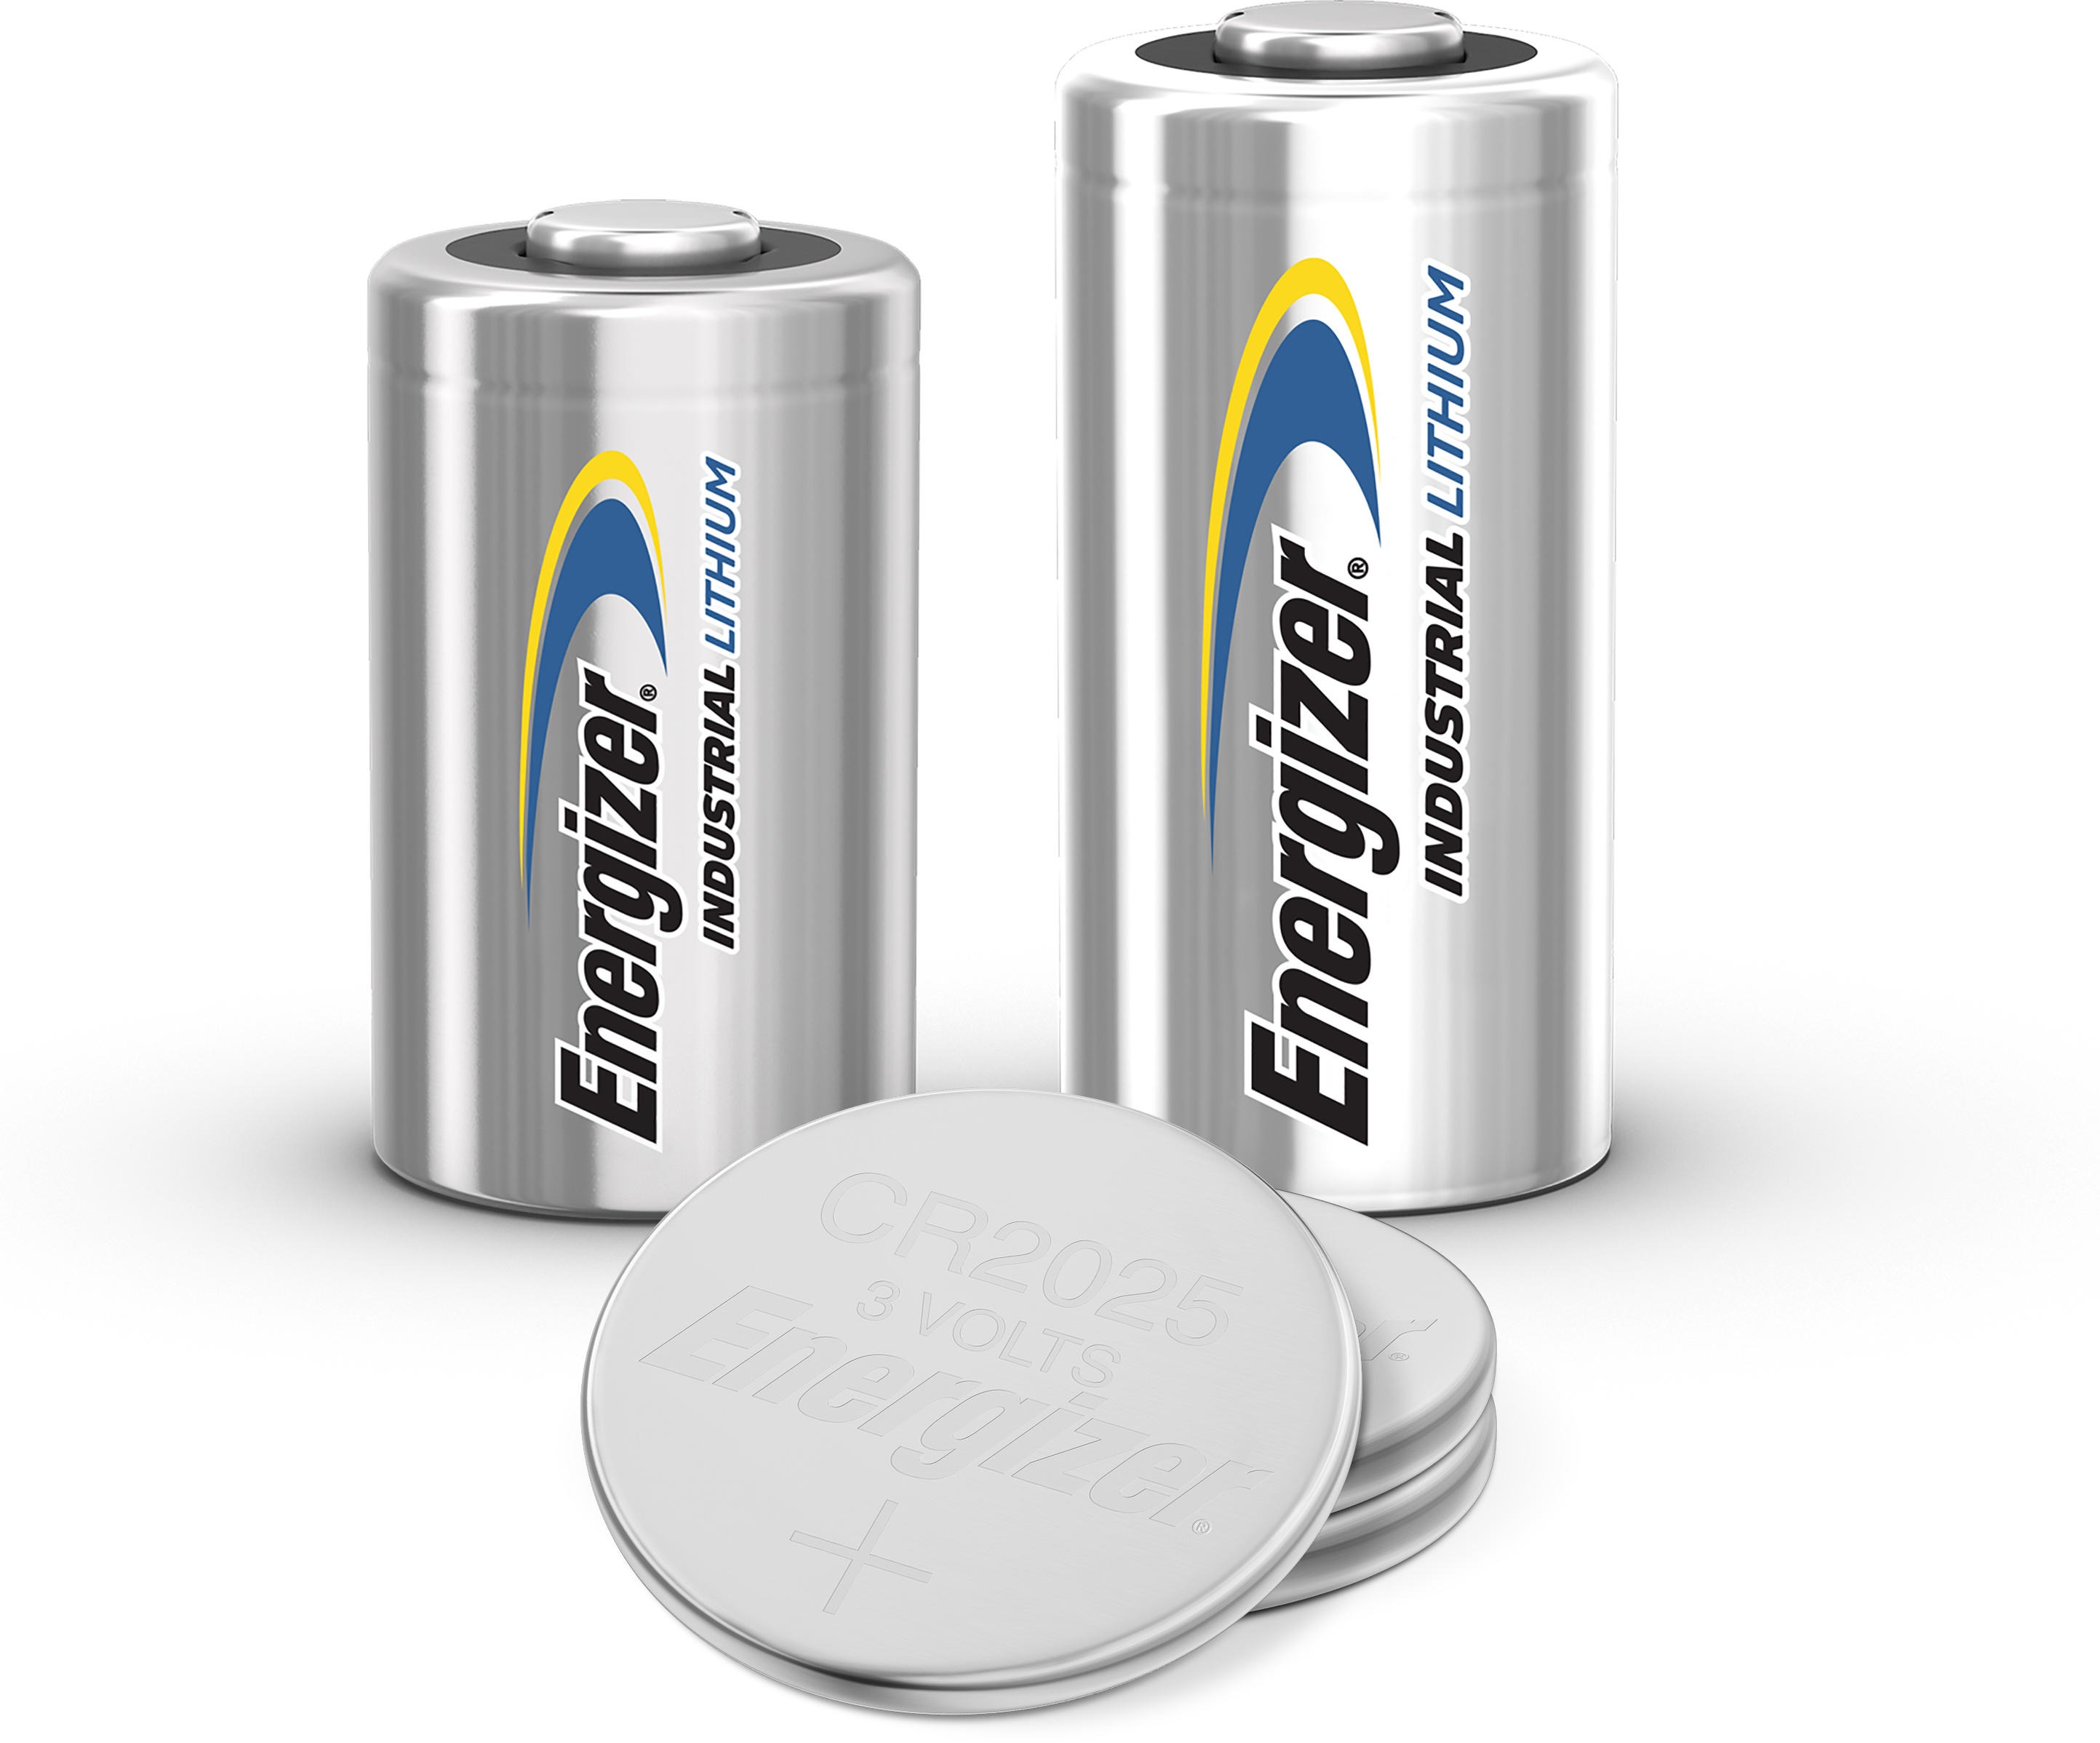 Energizer Industrial Lithium Batteries